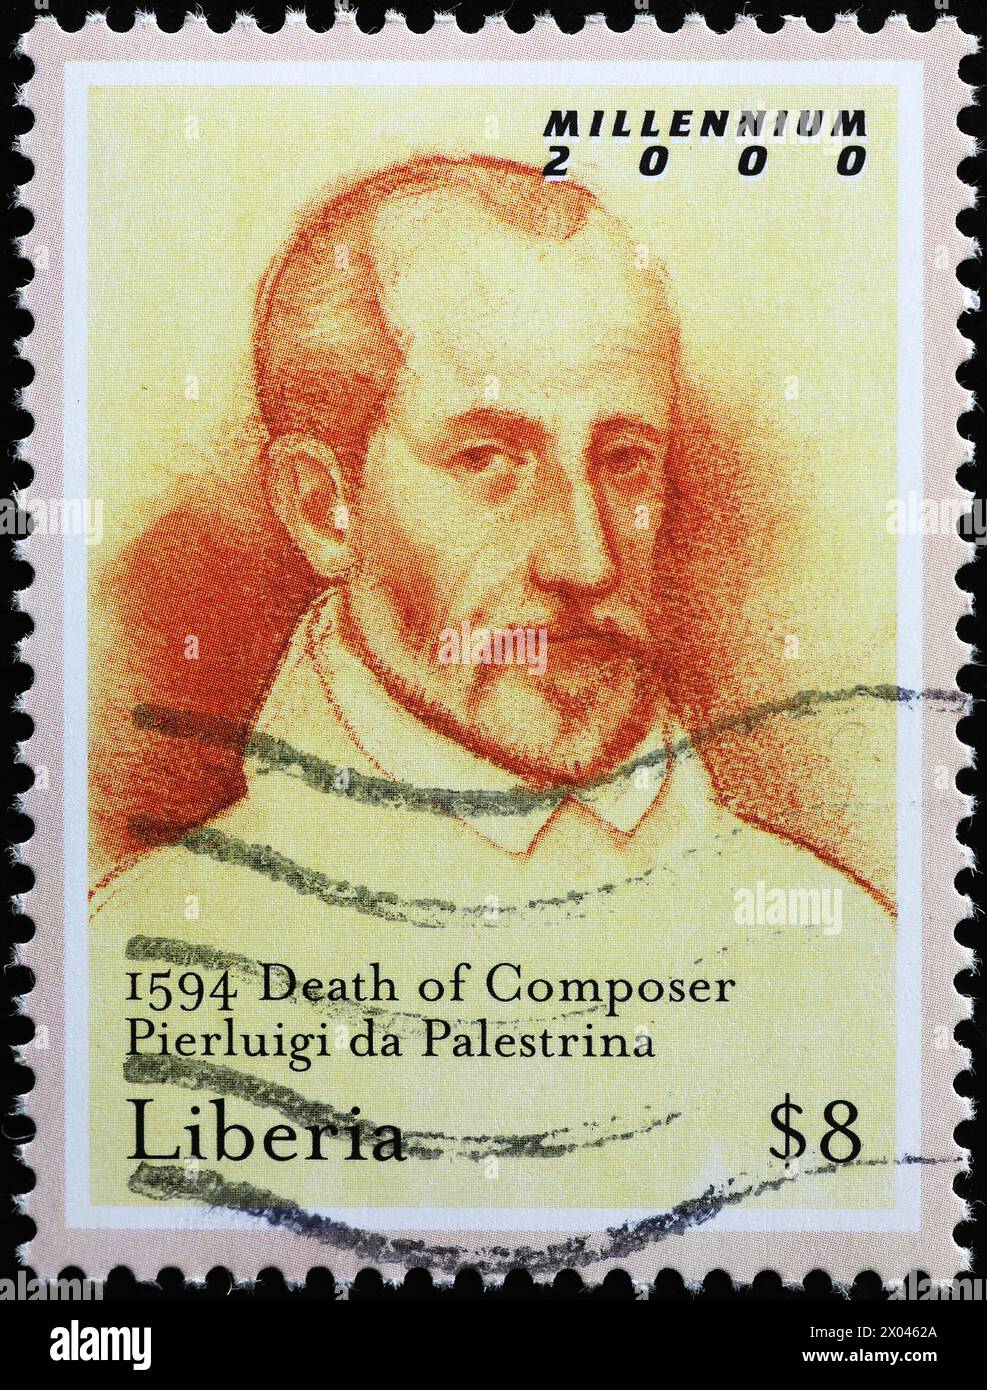 Komponist Pierluigi da Palestrina auf Briefmarke Stockfoto